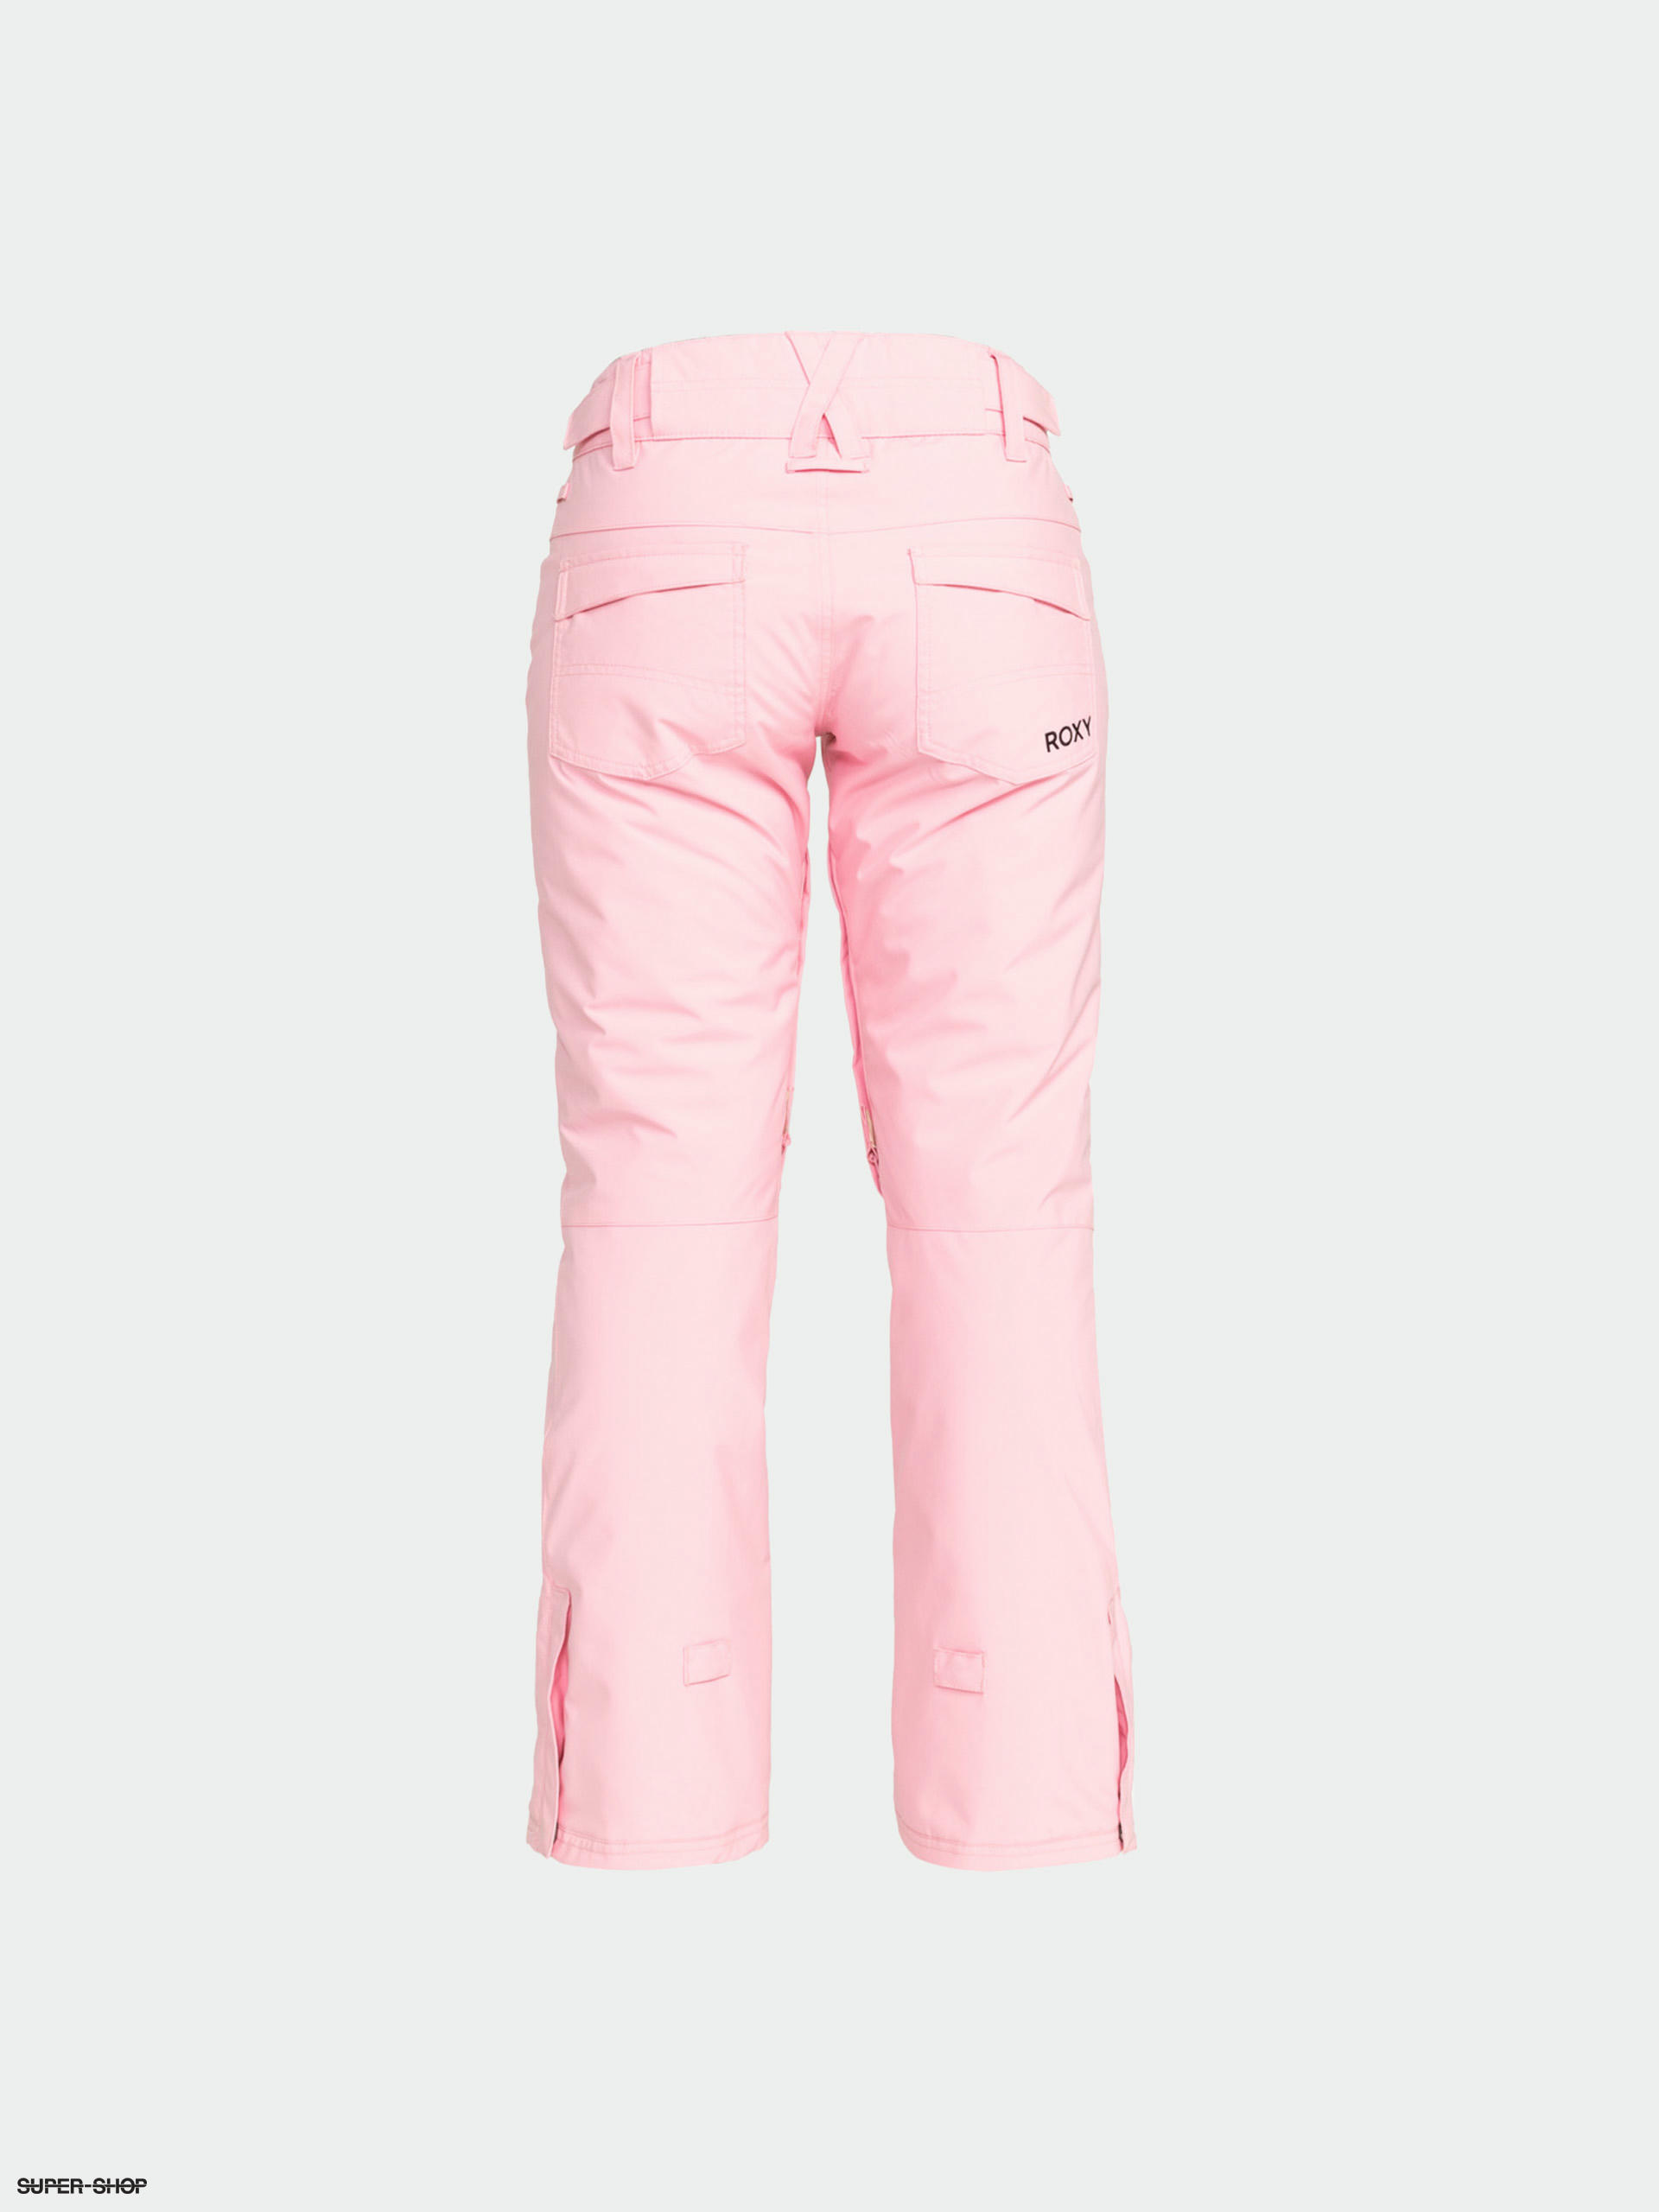 https://static.super-shop.com/1429247-roxy-backyard-snowboard-pants-wmn-pink-frosting.jpg?w=1920